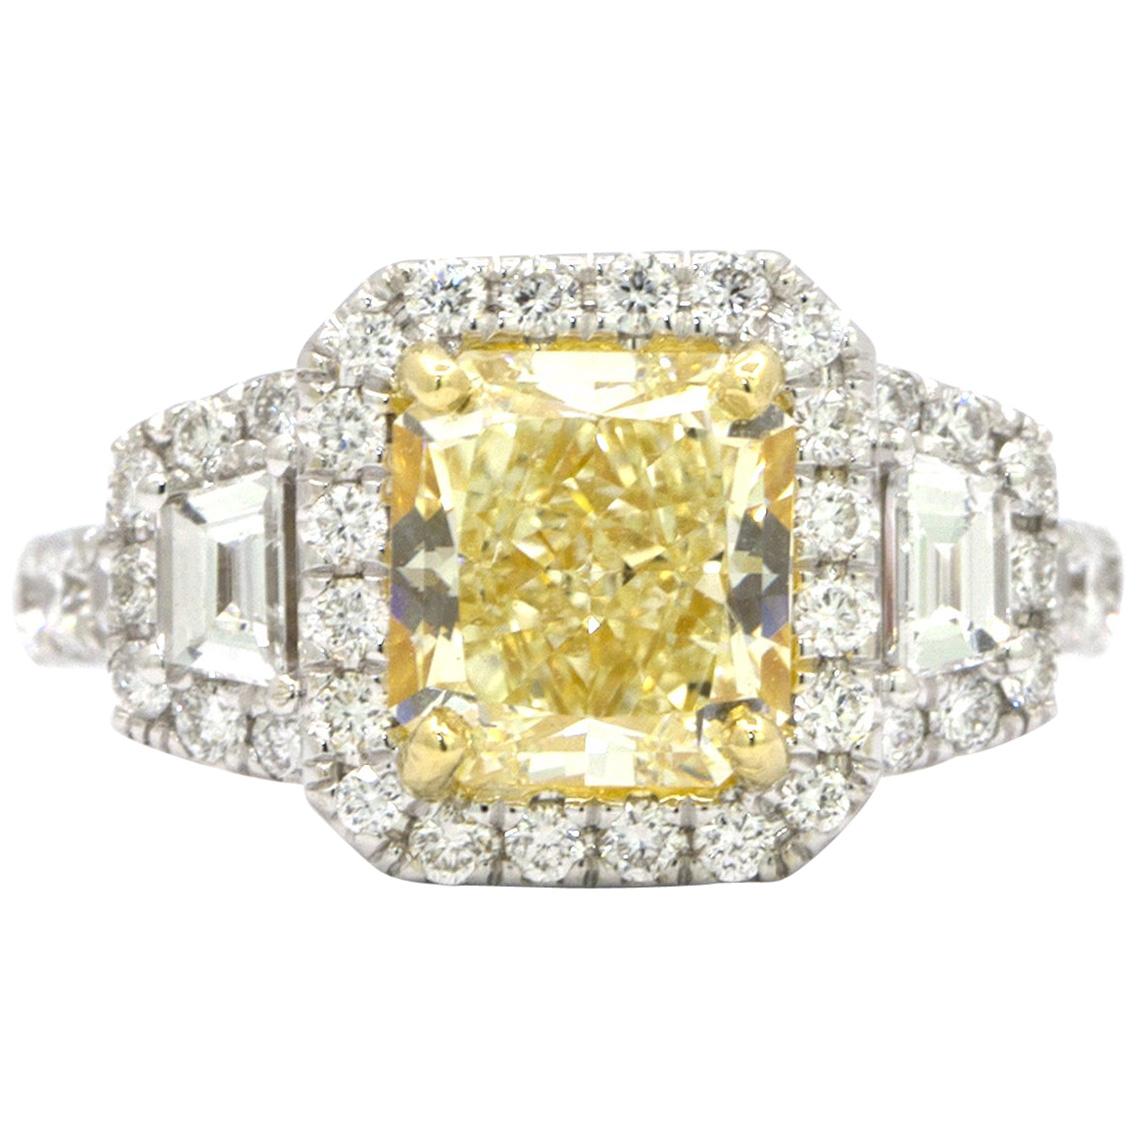 GIA Certified 2.39 Carat Fancy Yellow Radiant Cut Diamond Ring